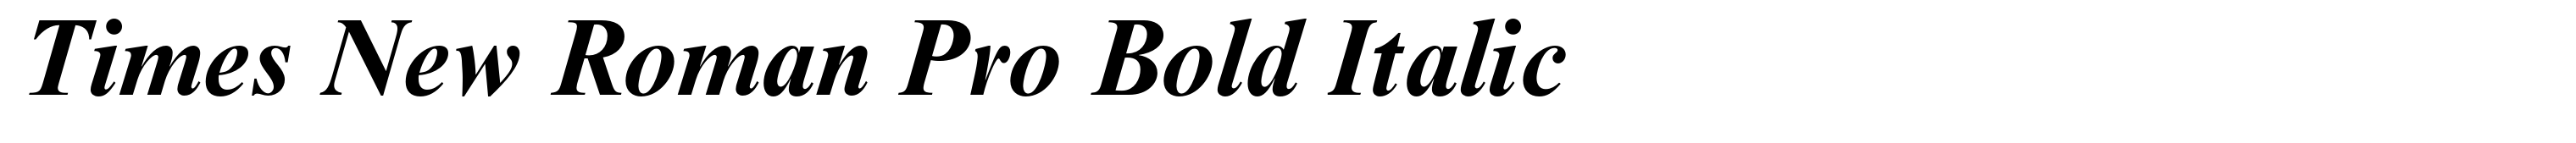 Times New Roman Pro Bold Italic